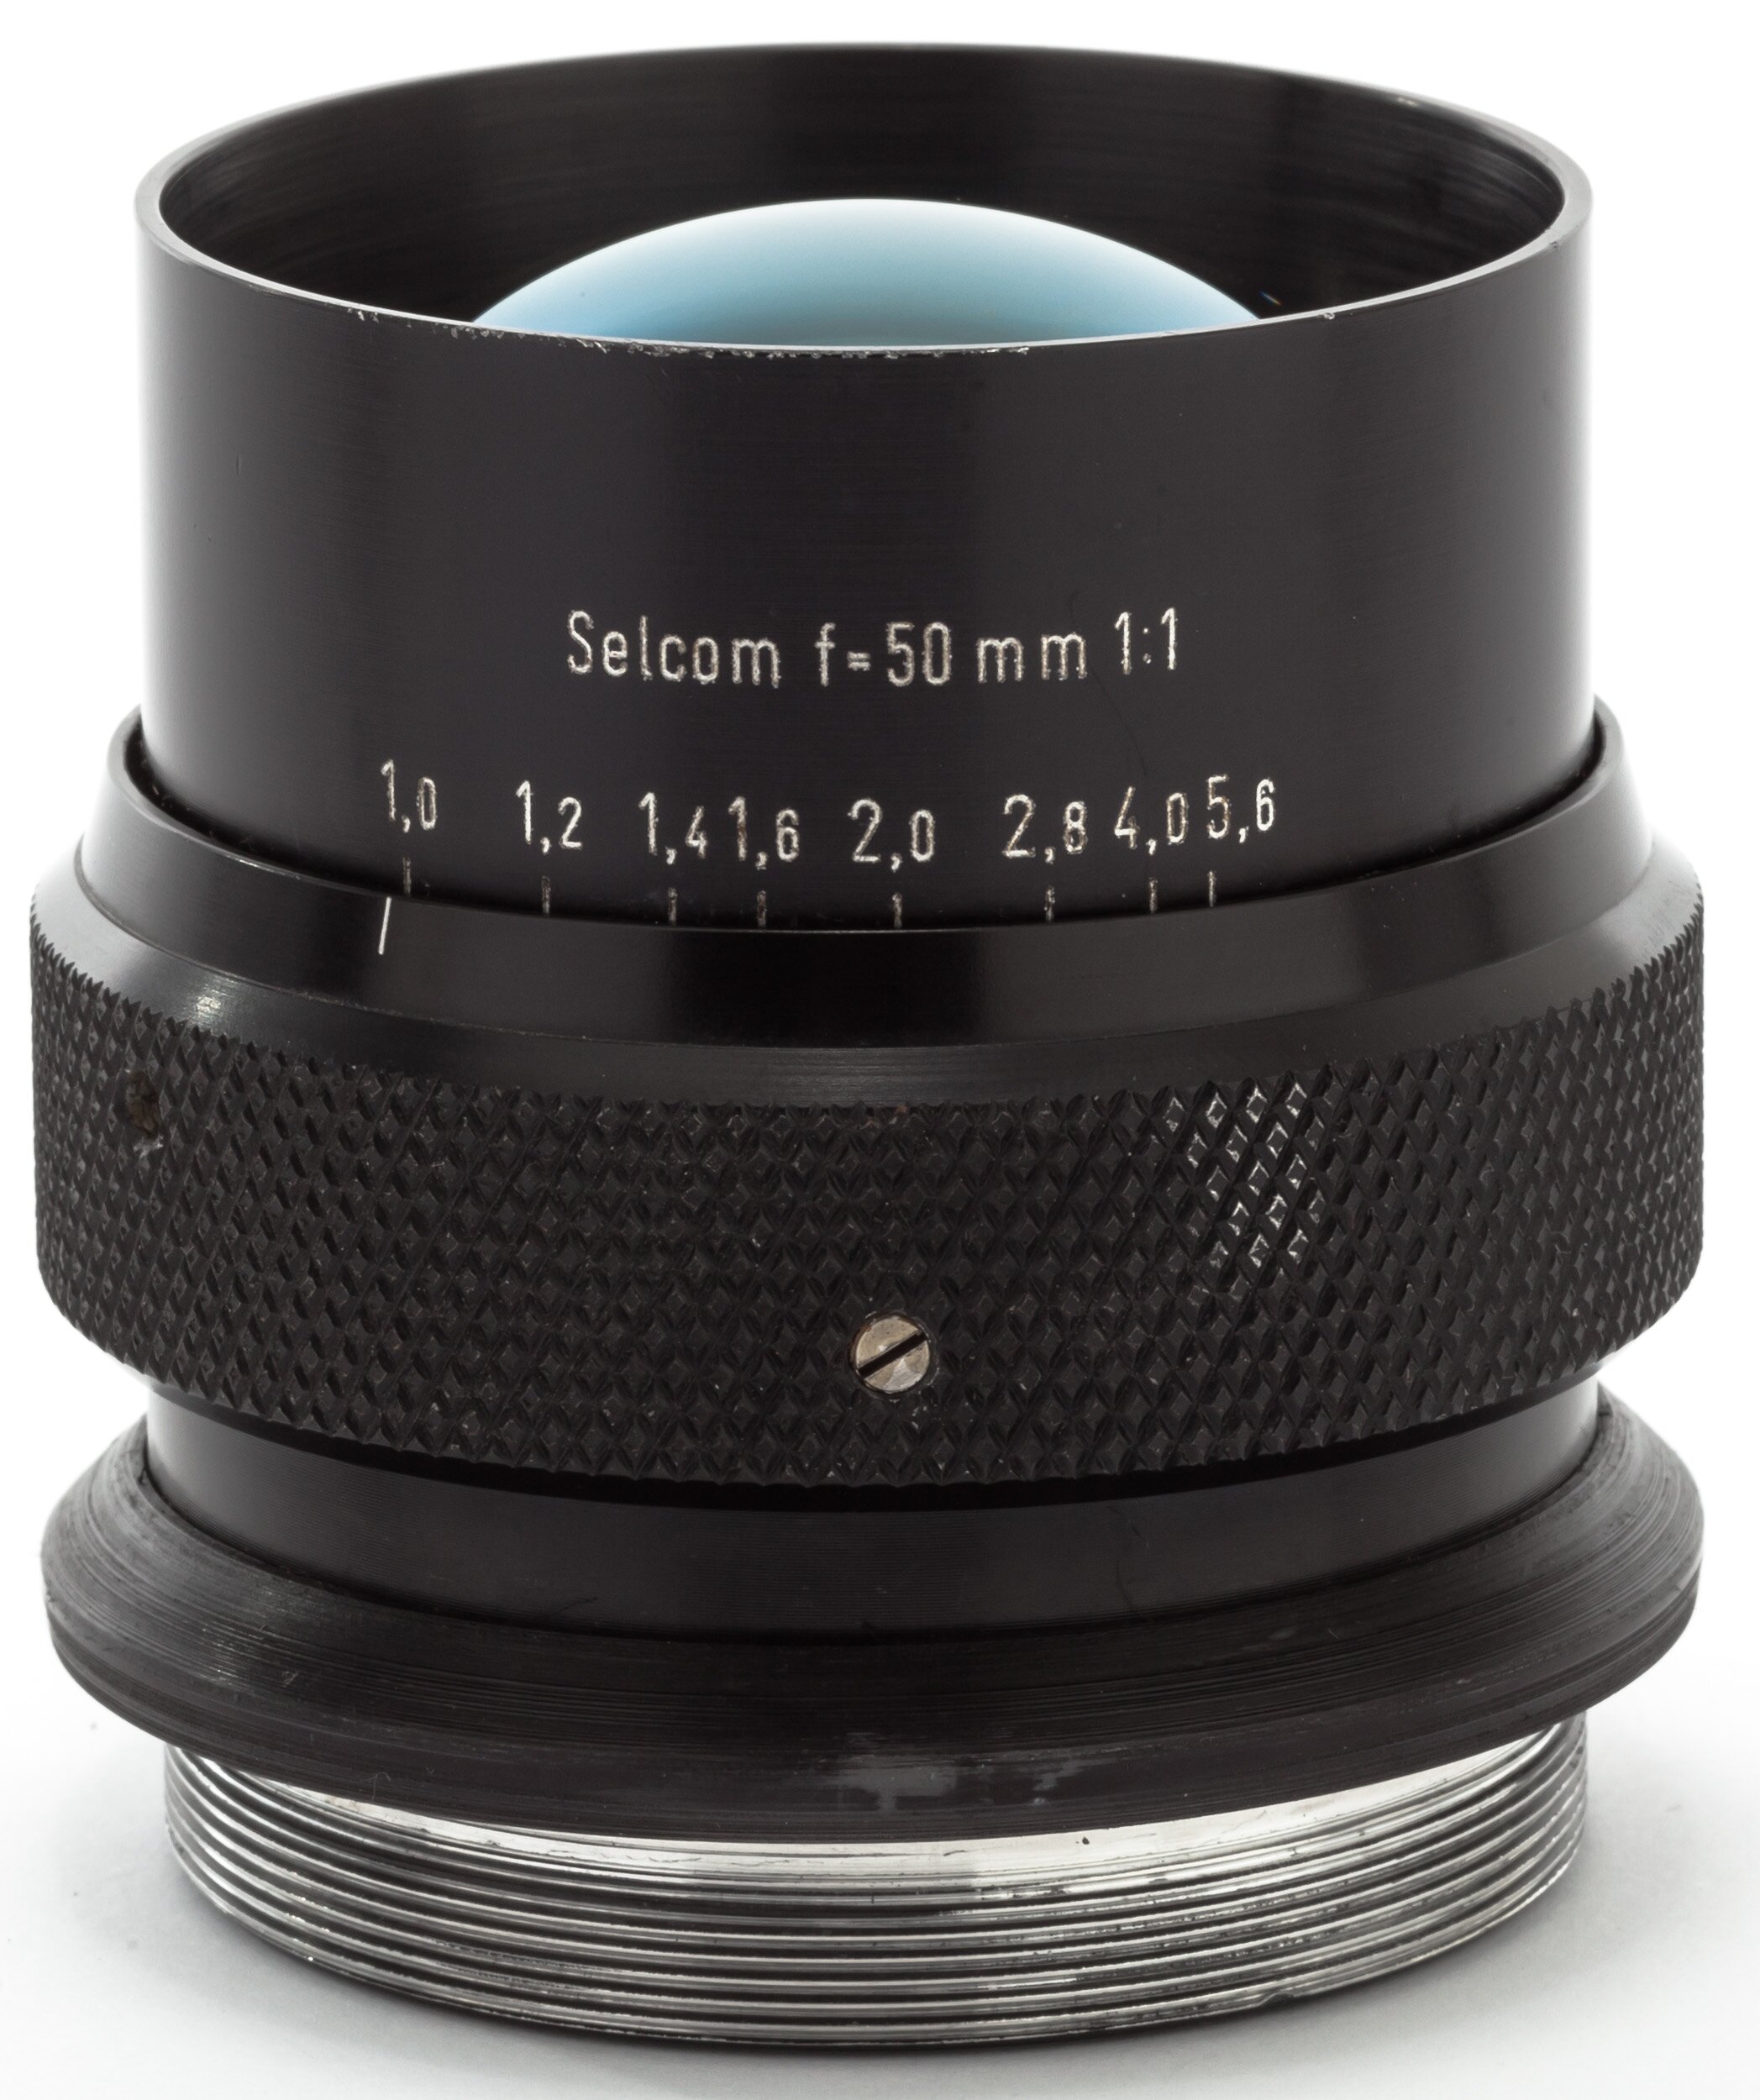 Dallmeyer Selcom 1/50mm Lens Head